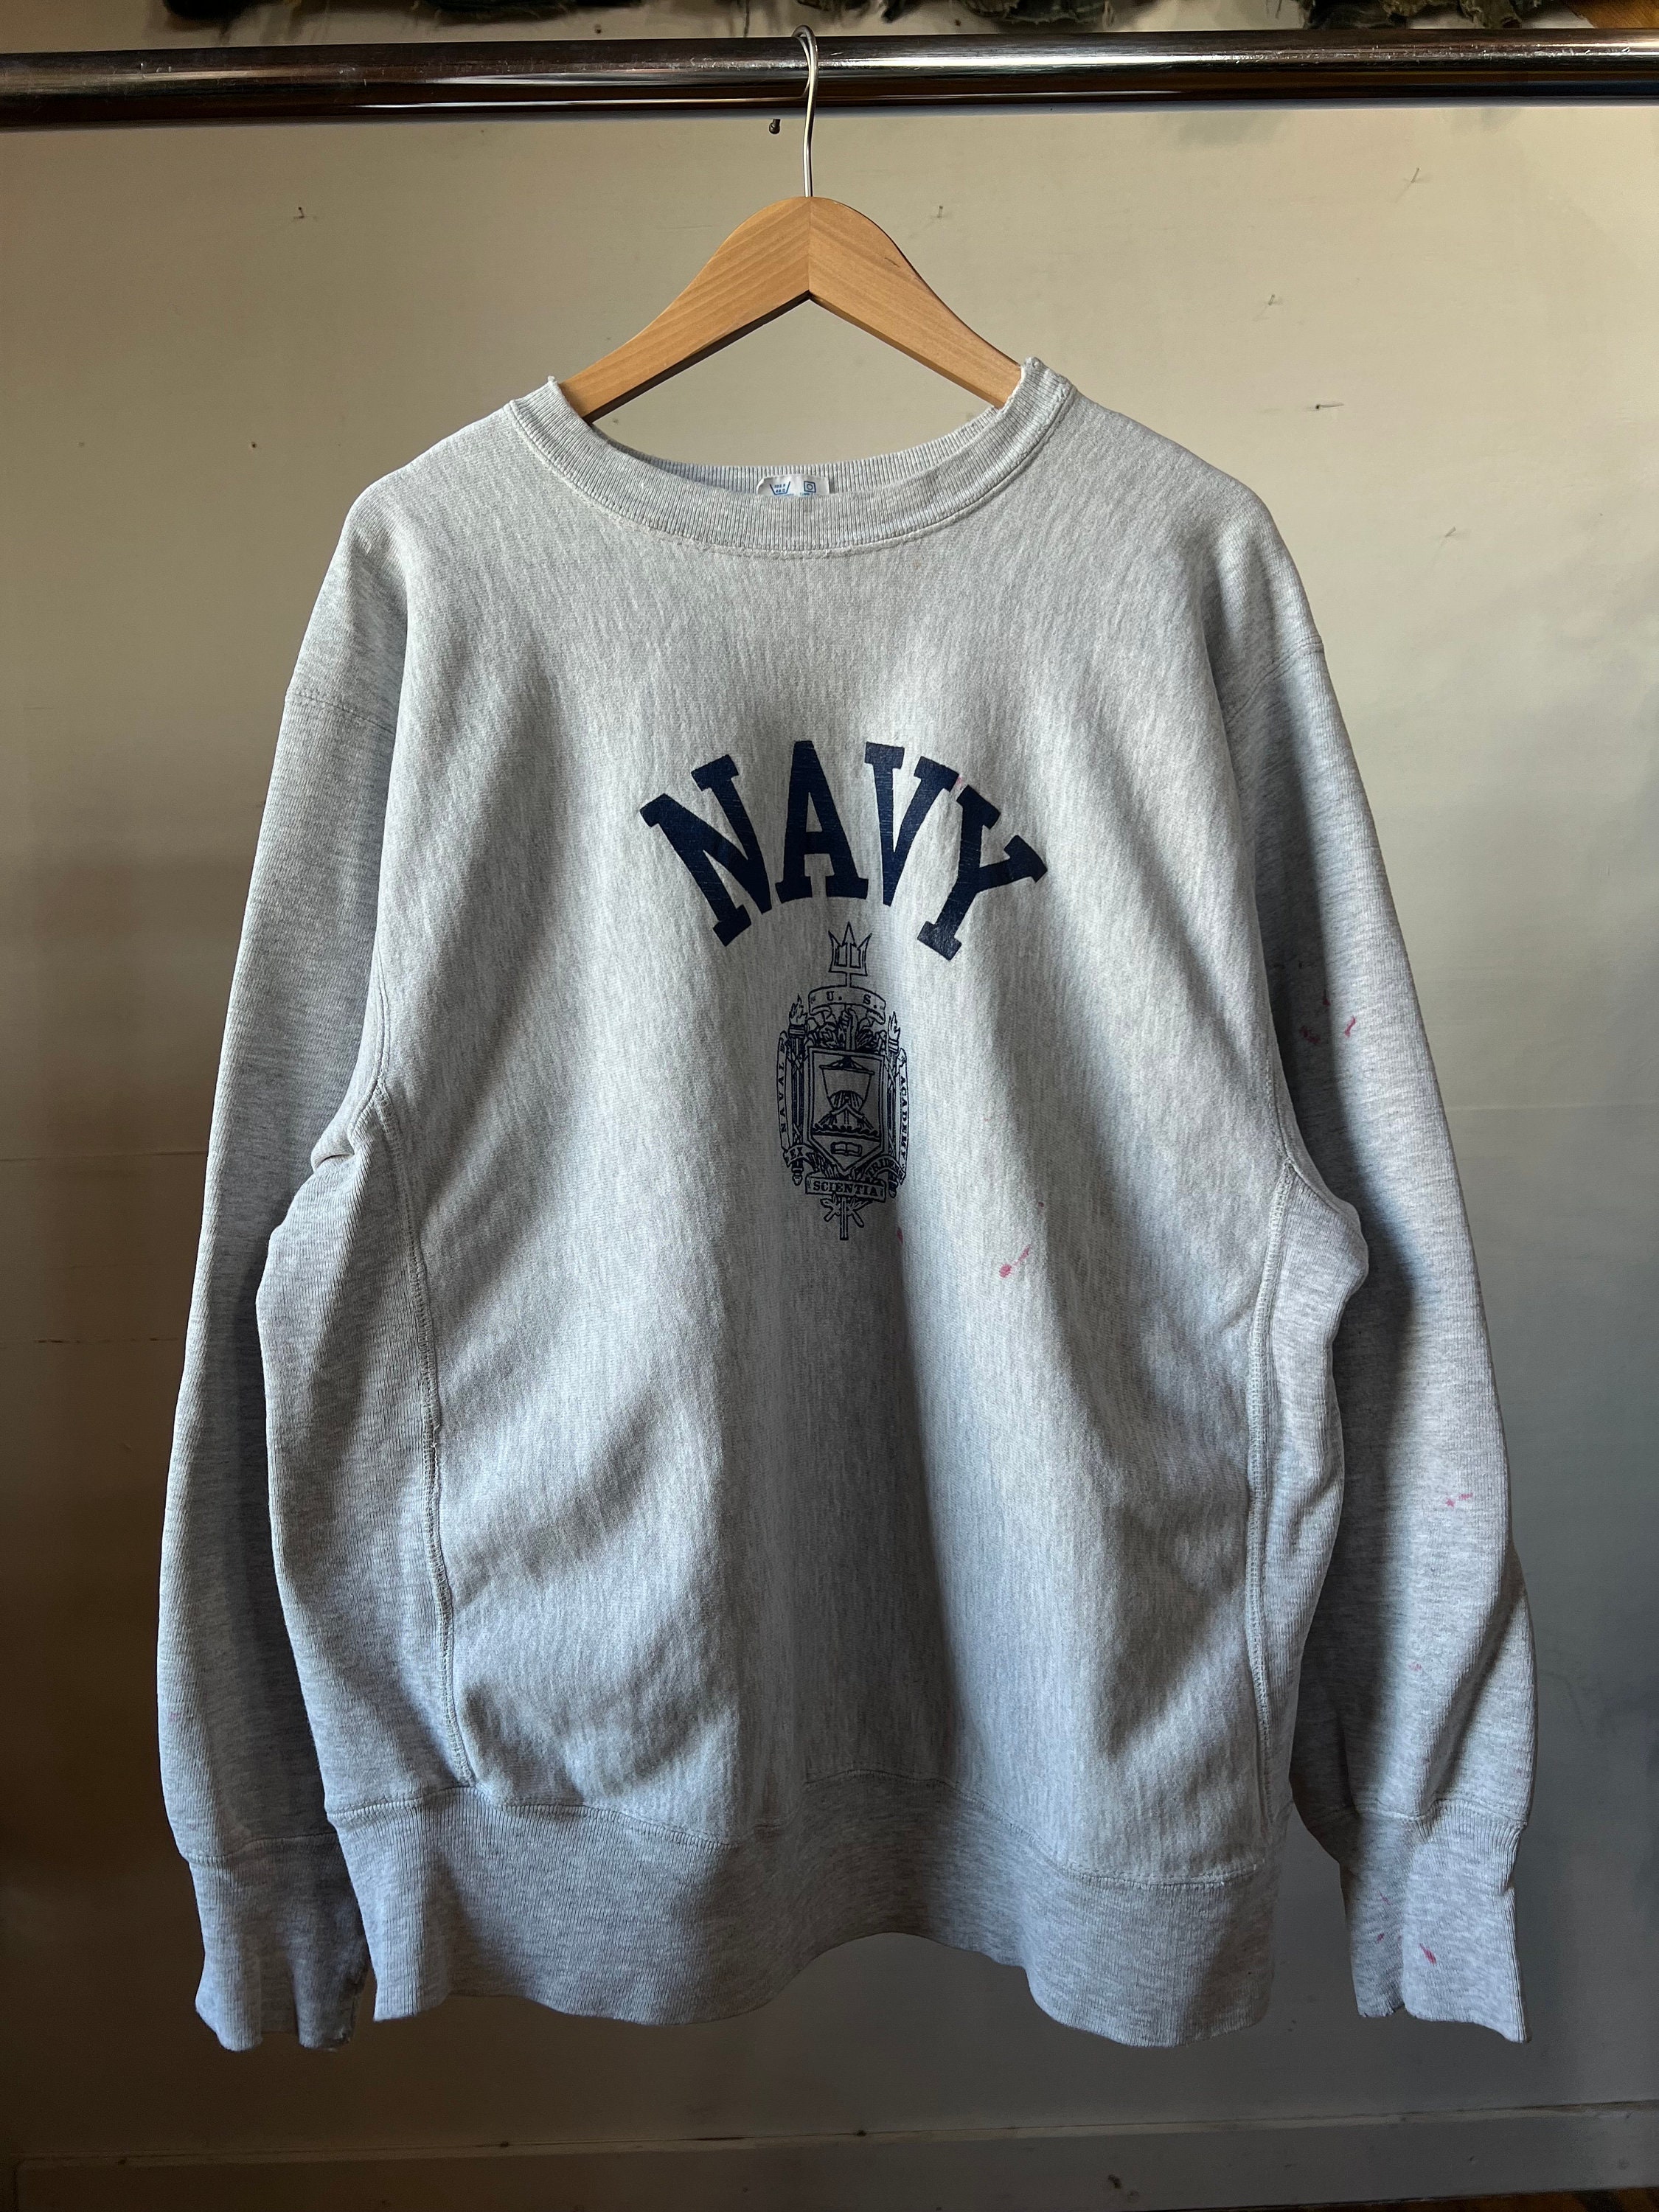 XL, 1980s Champion Reverse Weave Navy Sweatshirt, Vintage, Grey